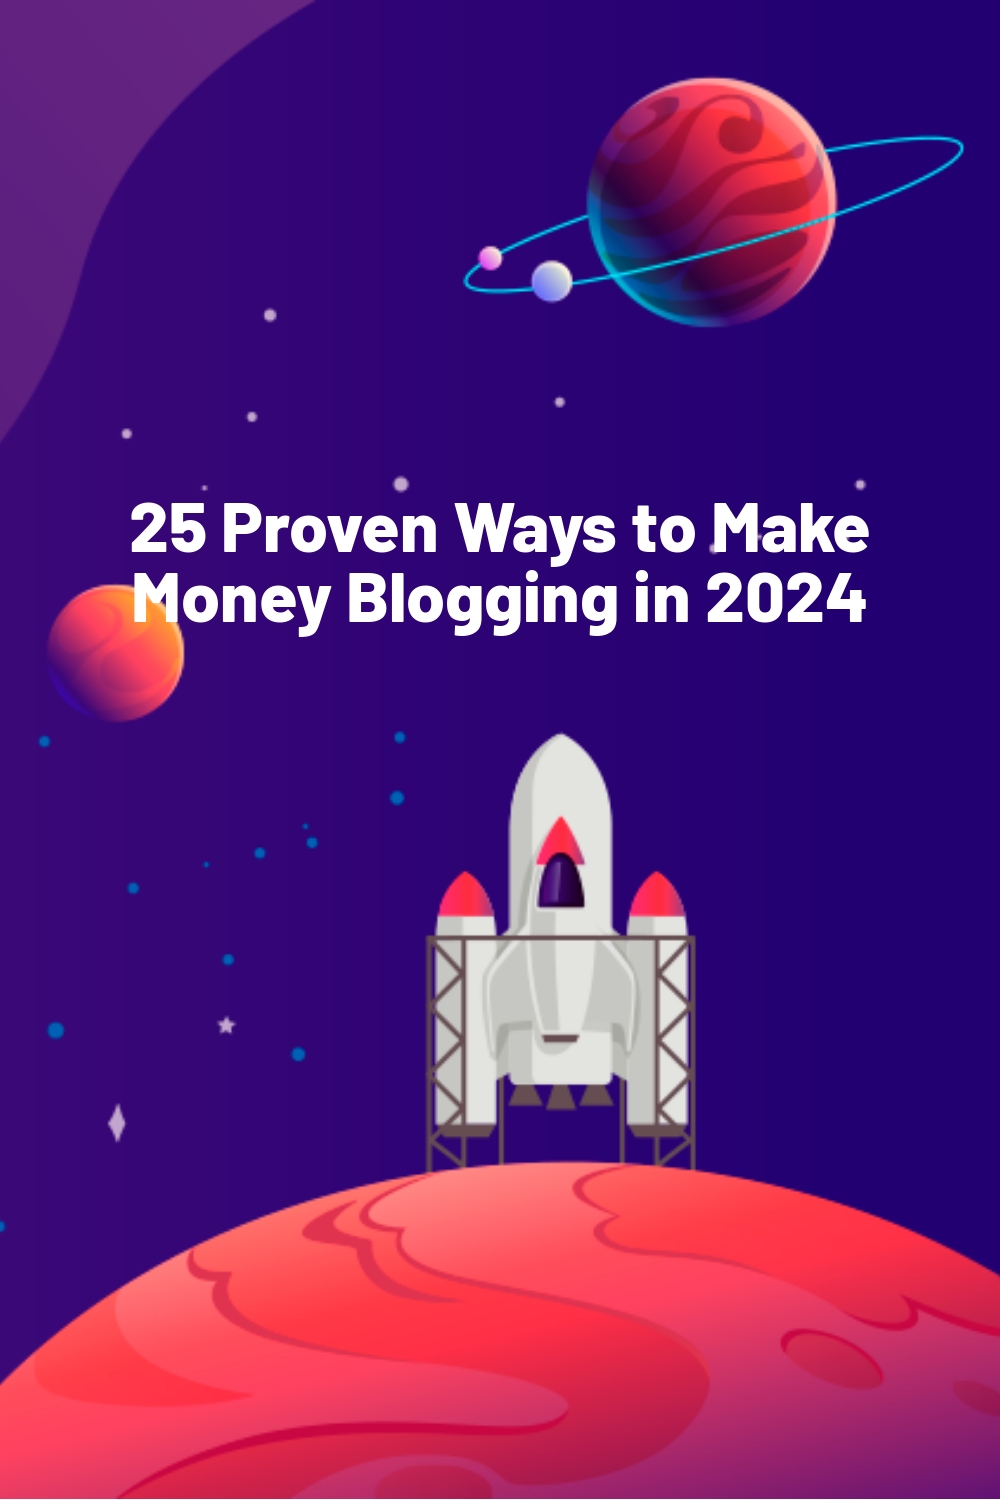 25 Proven Ways to Make Money Blogging in 2024